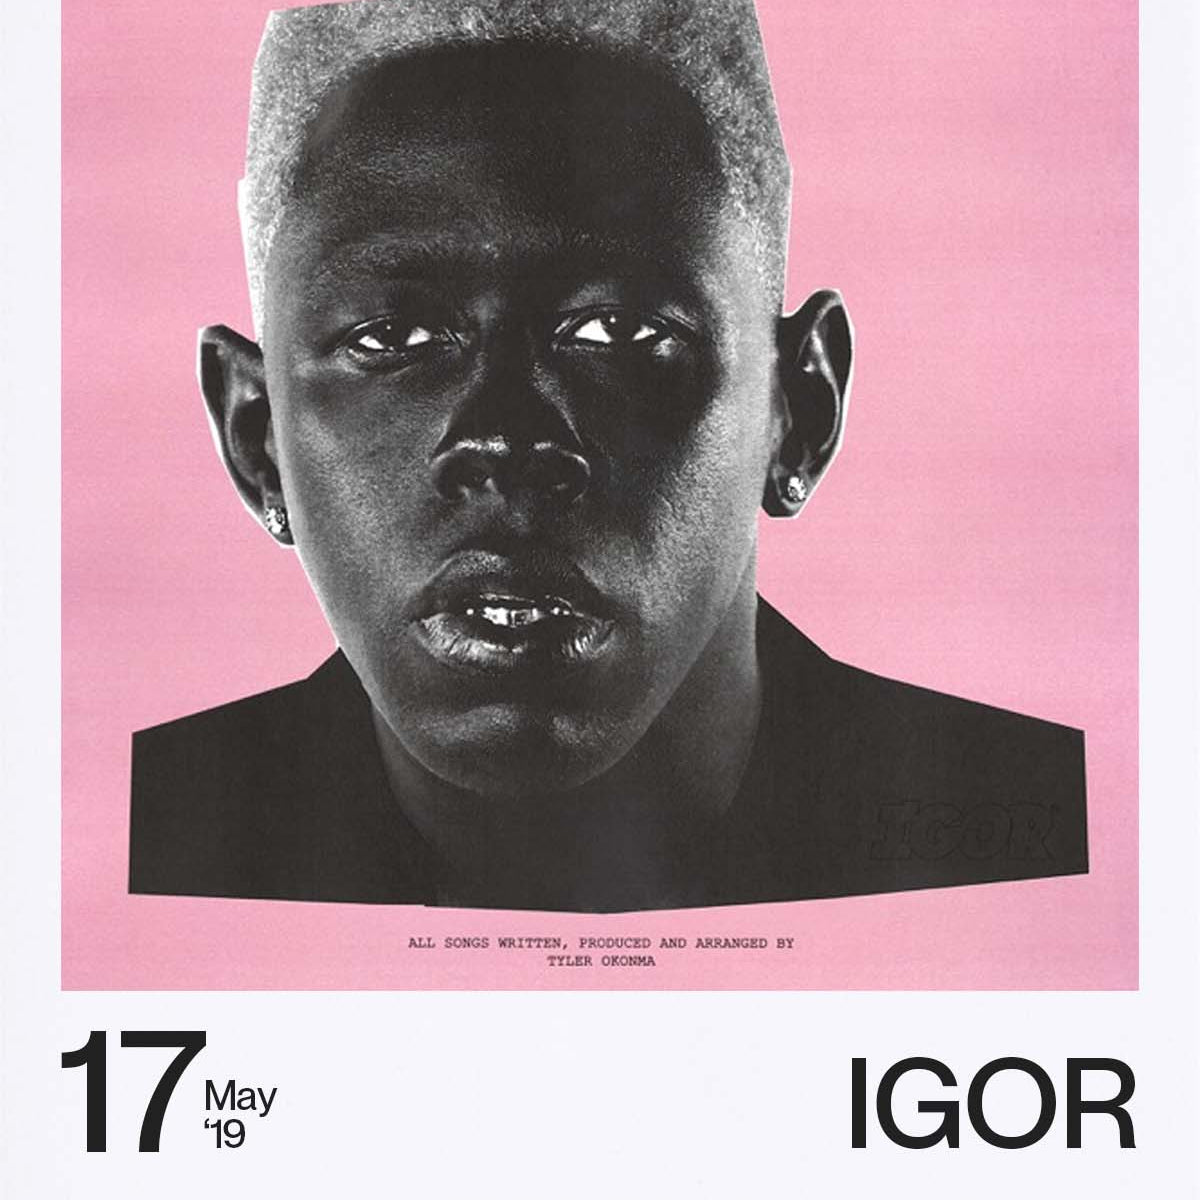 Igor Poster